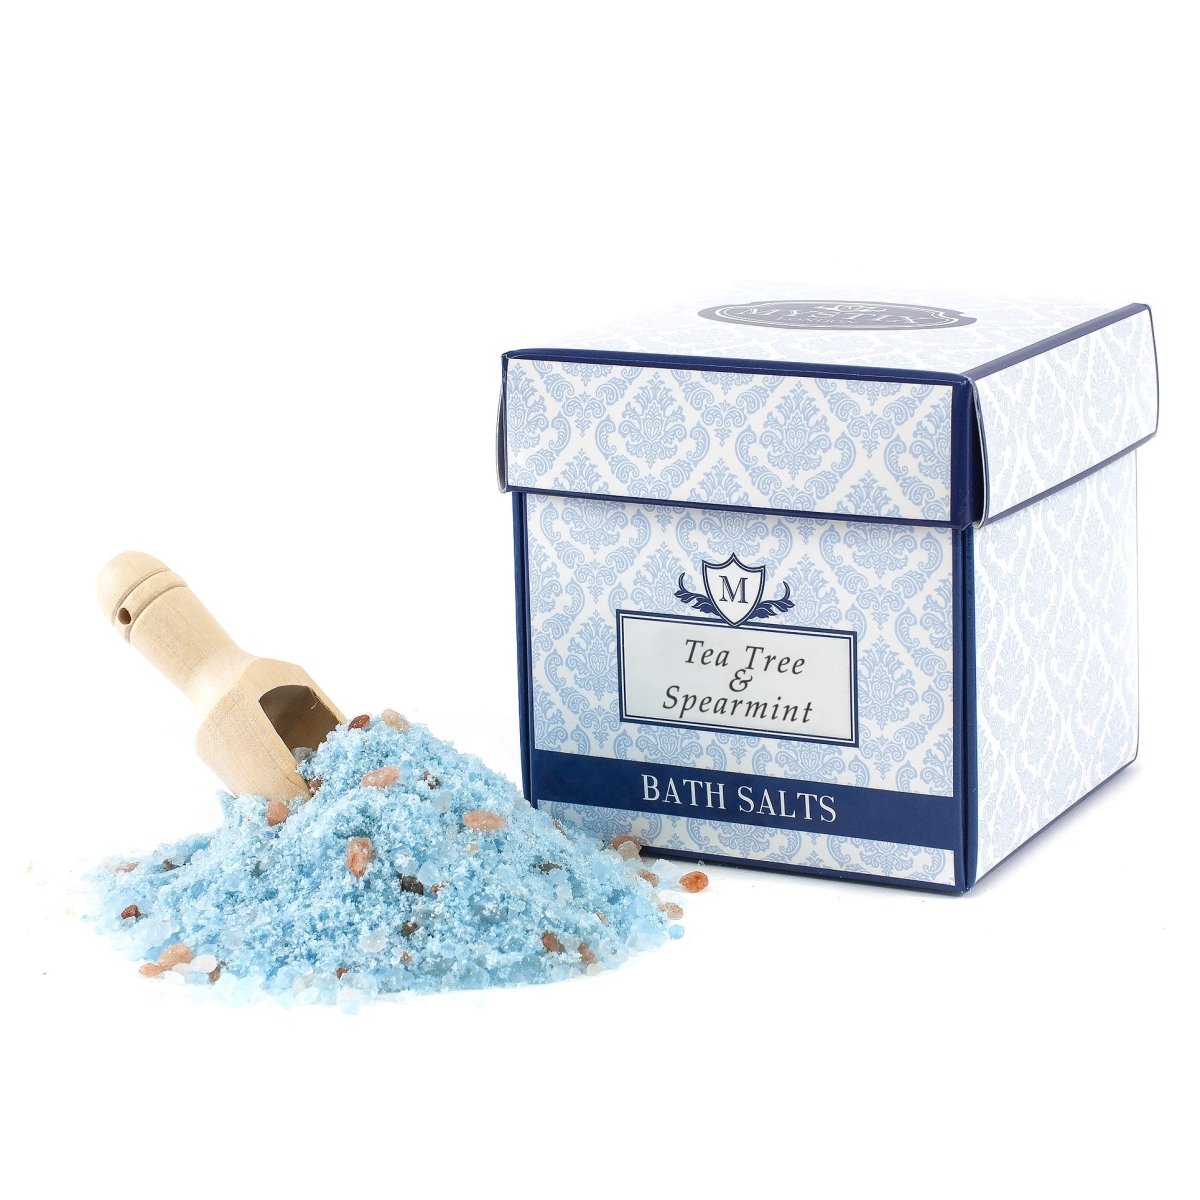 Tea Tree & Spearmint Essential Oil Bath Salt 350g - Mystic Moments UK